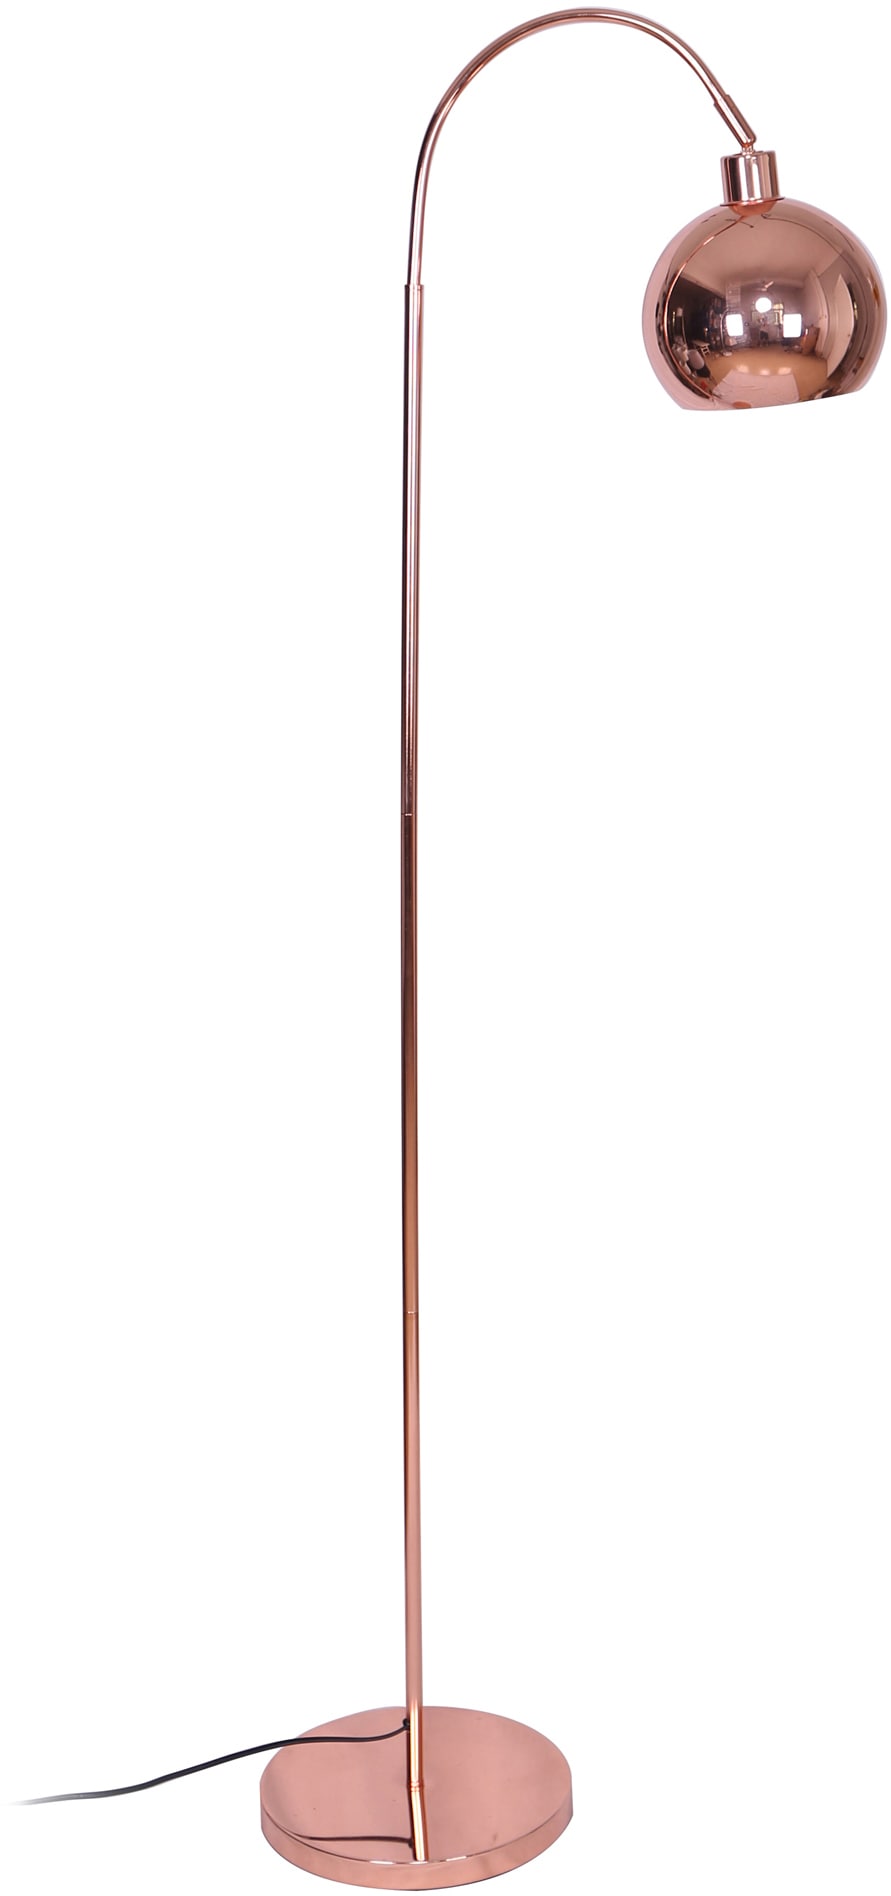 SalesFever Stehlampe »Pepe«, 1 flammig-flammig, Gestell und Schirm in Kupferoptik gebürstet